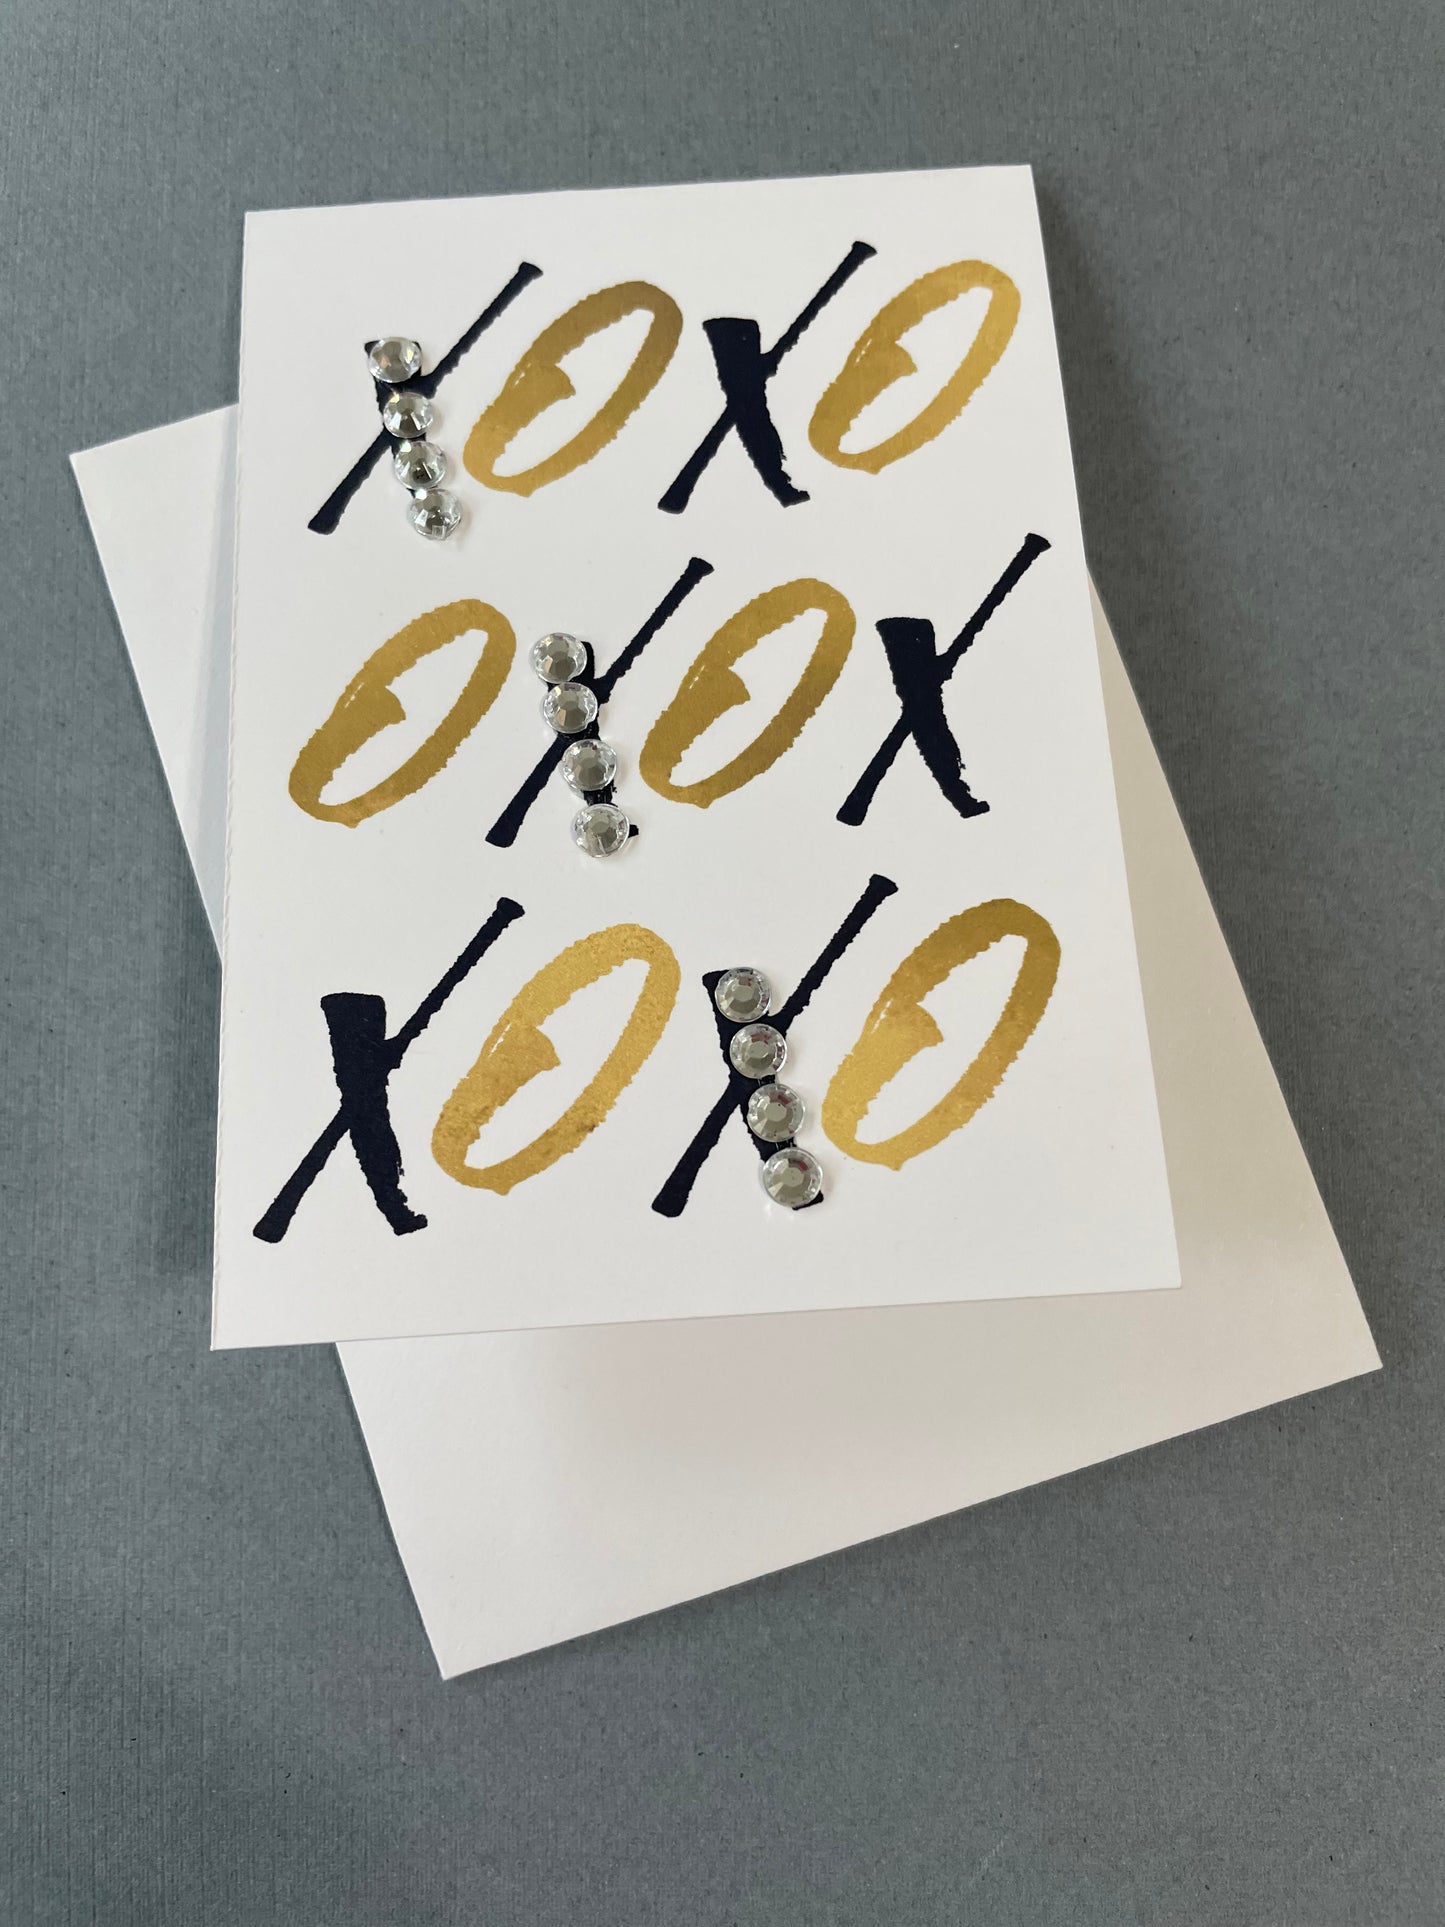 XOXOXOXO Greeting Card Mini Size